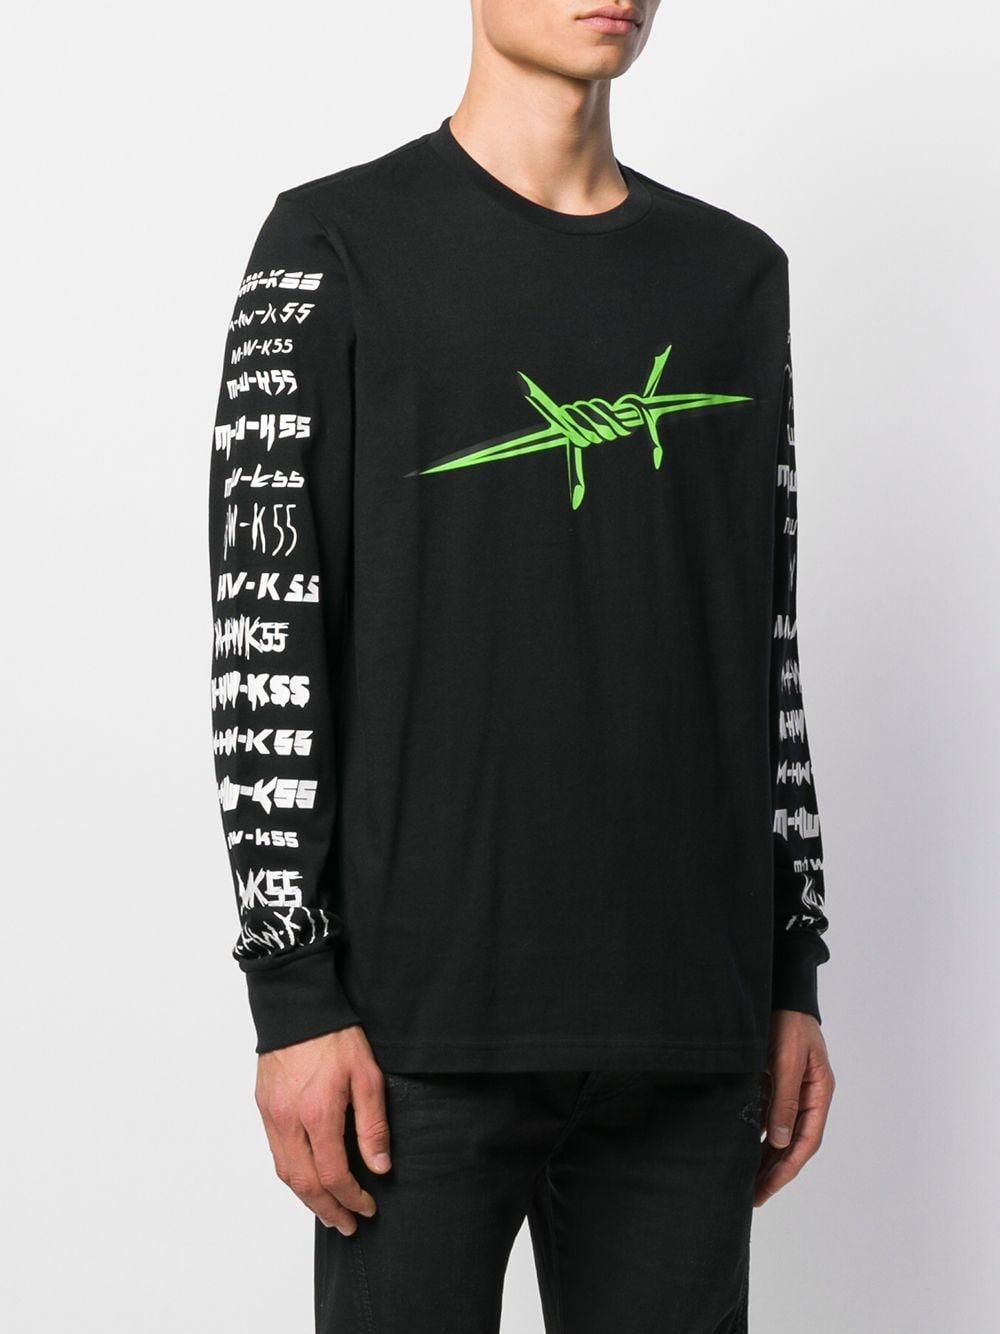 DIESEL Cotton Logo Sweatshirt With Barbed Wire Print in Black for Men - Lyst